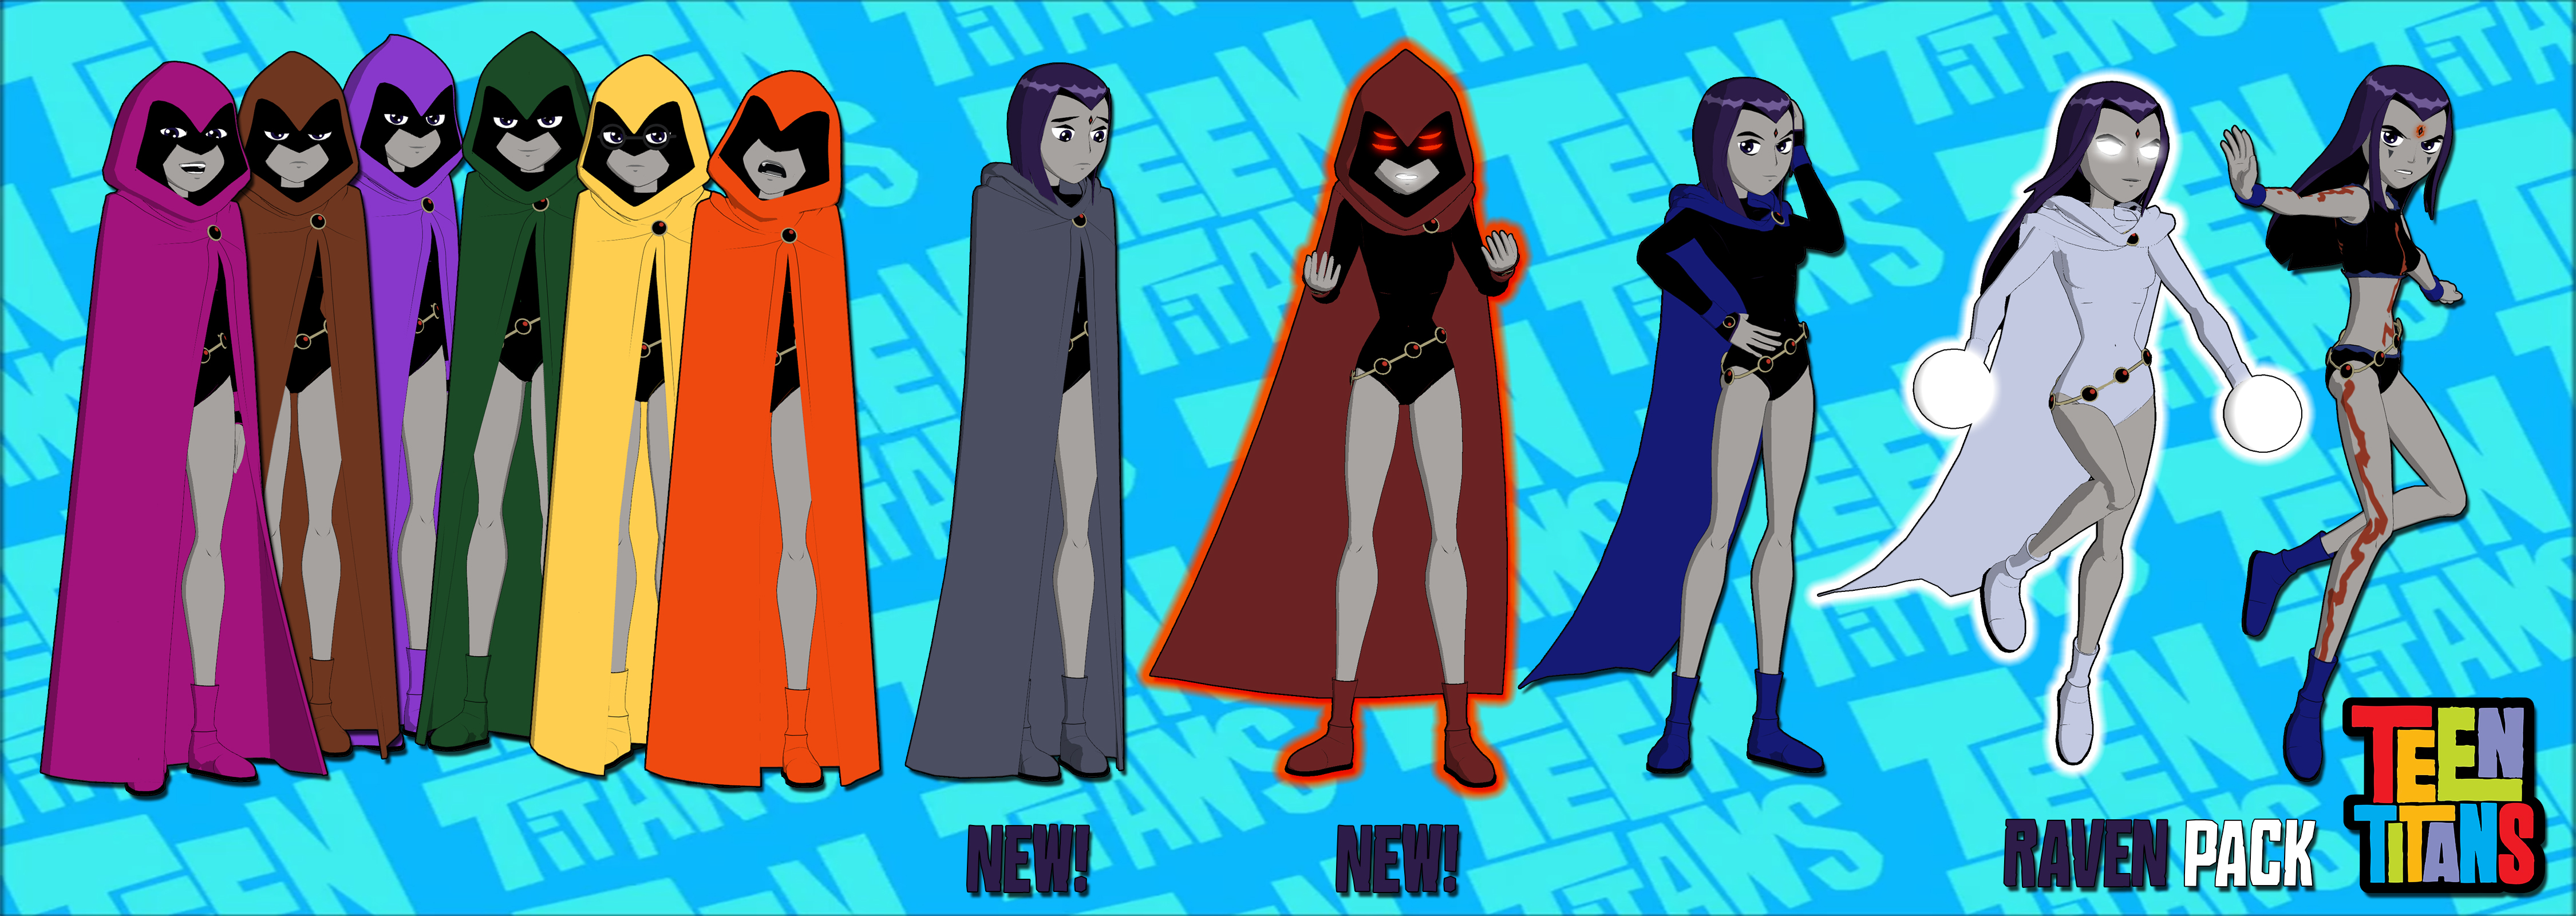 Teen Titans Raven Base